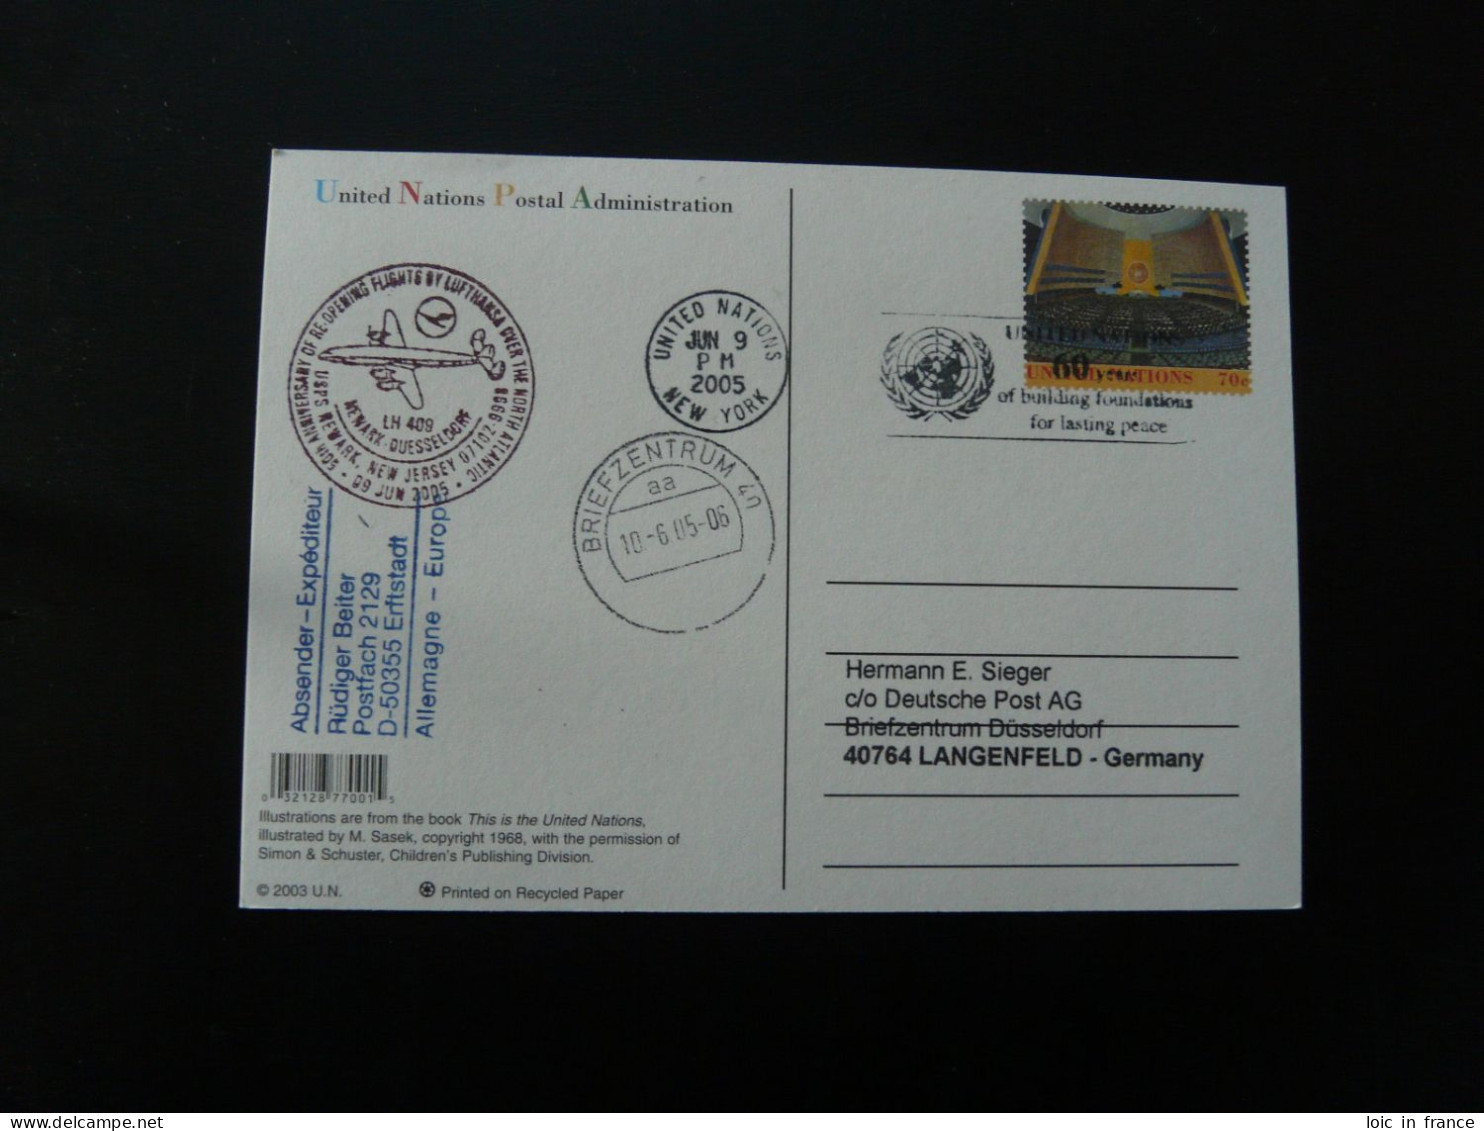 Premier Vol First Flight Newark Dusseldorf United Nations Stationery Card Lufthansa 2005 - Lettres & Documents